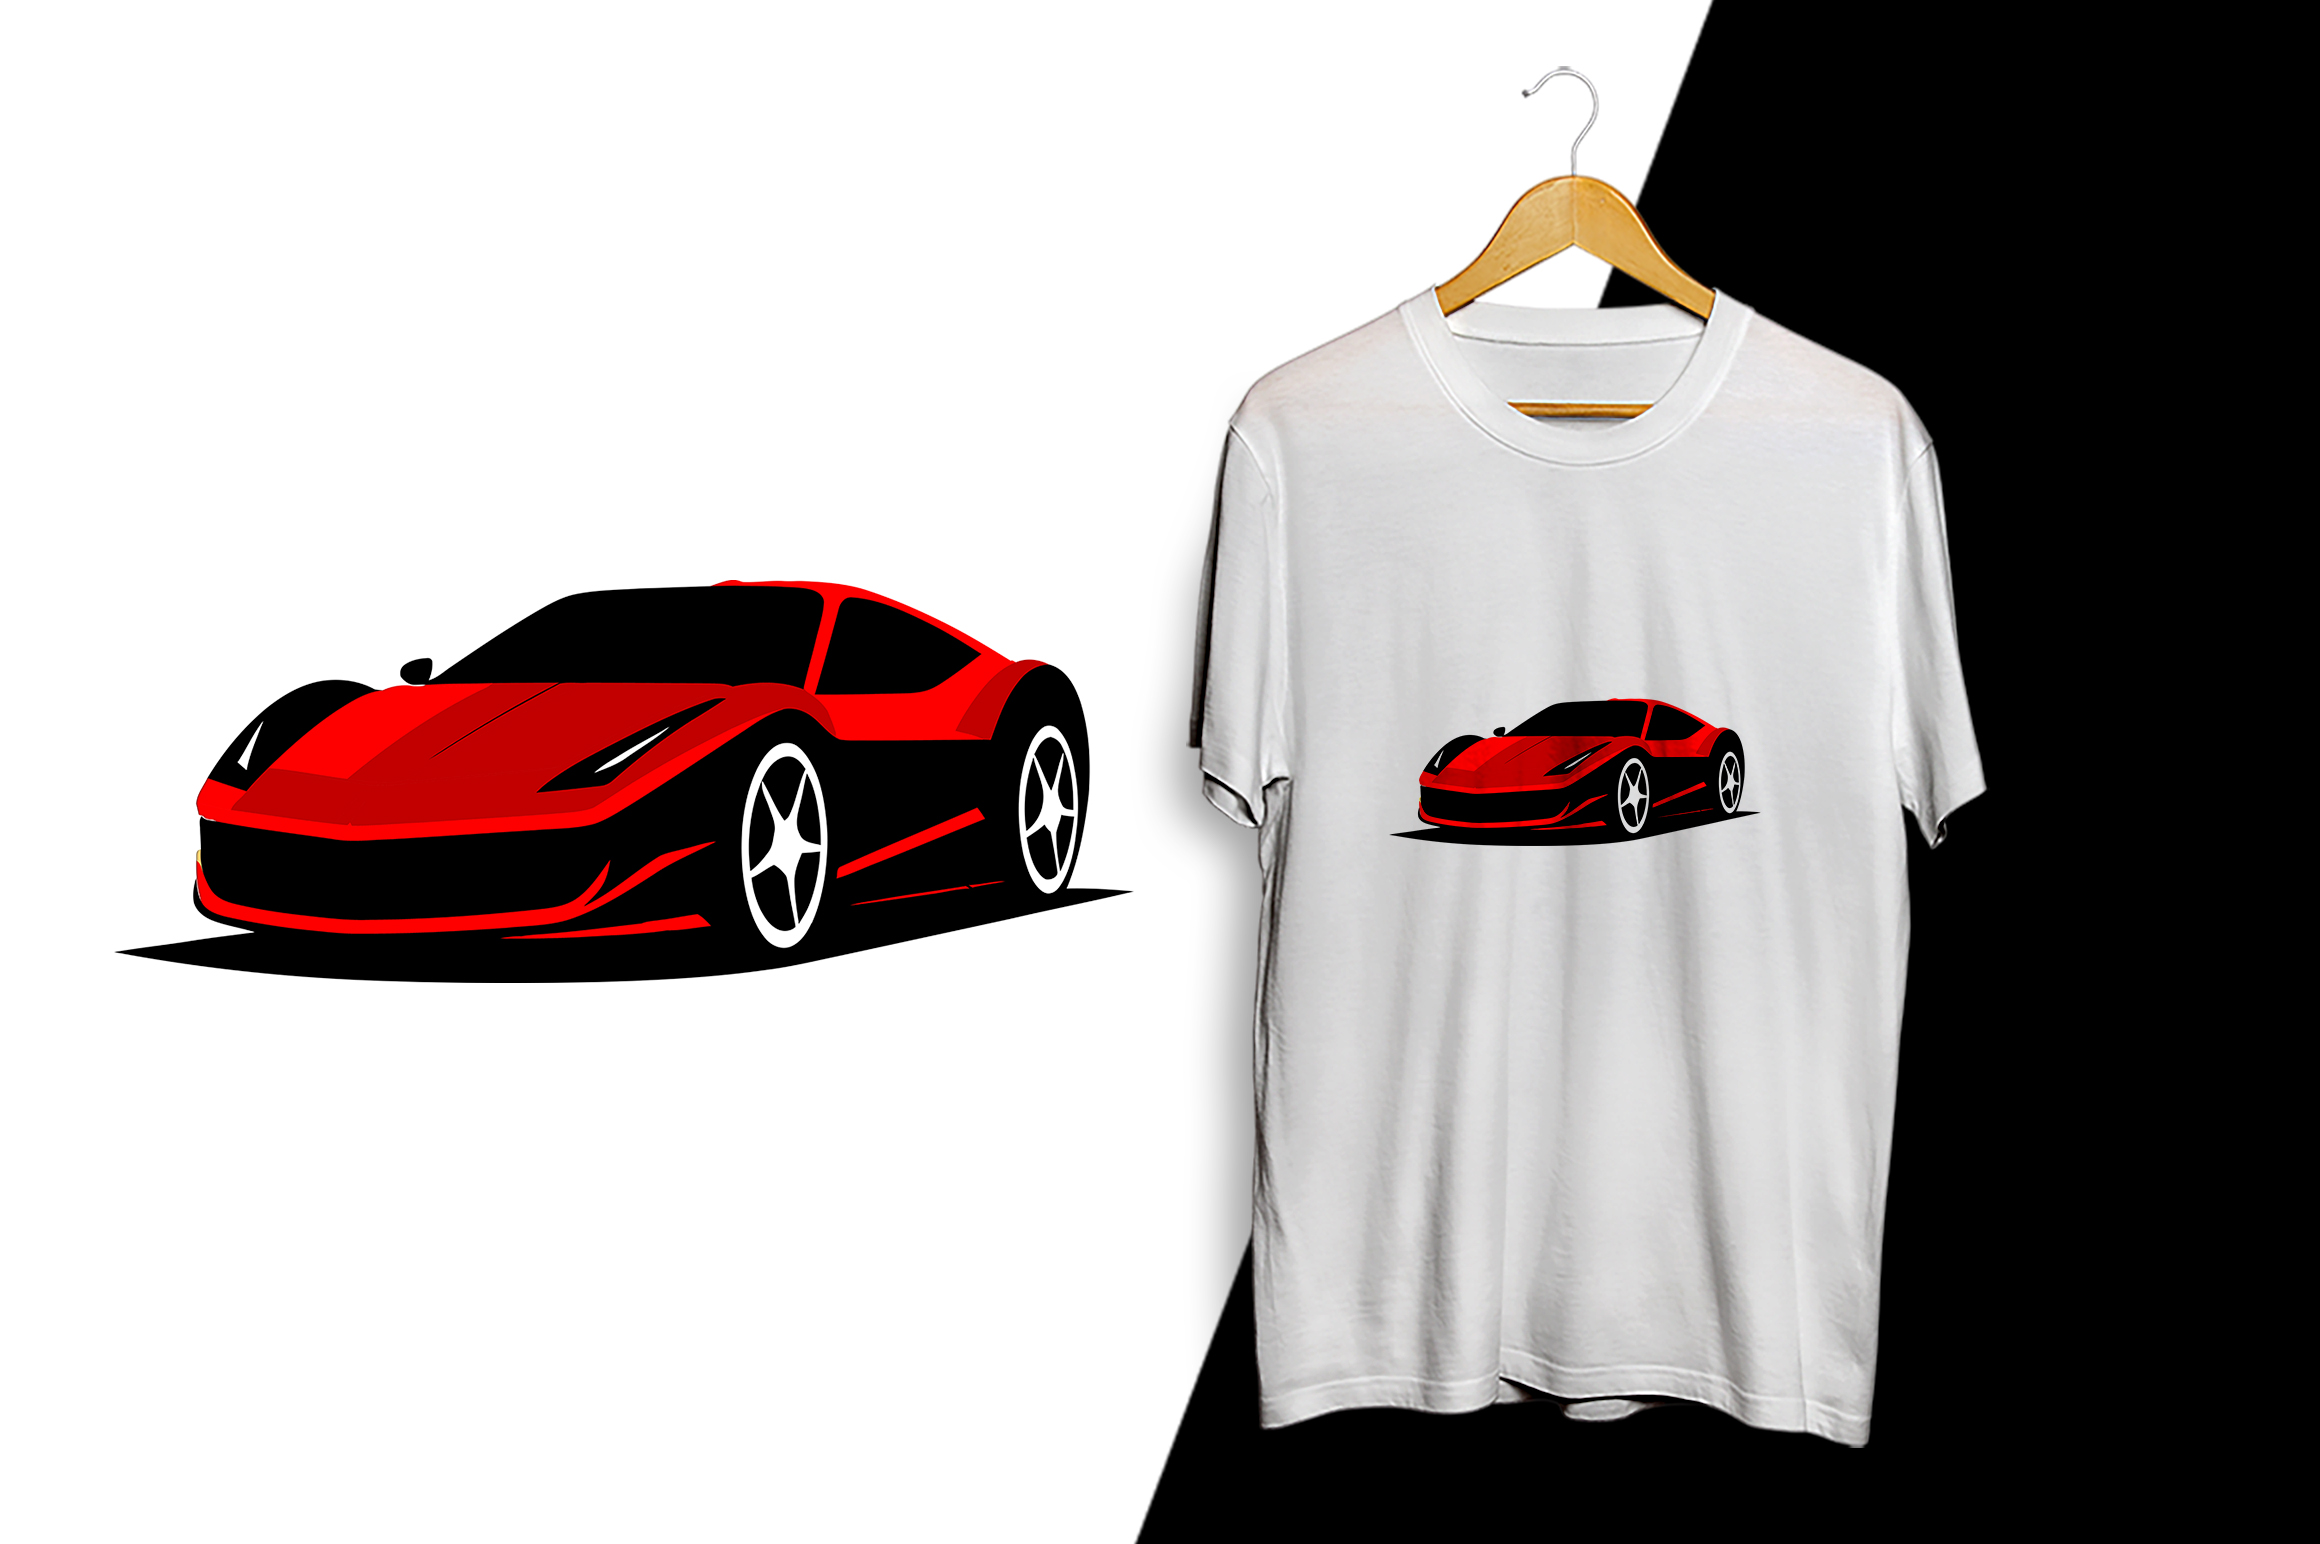 red sports car logo t shirt mockup 140